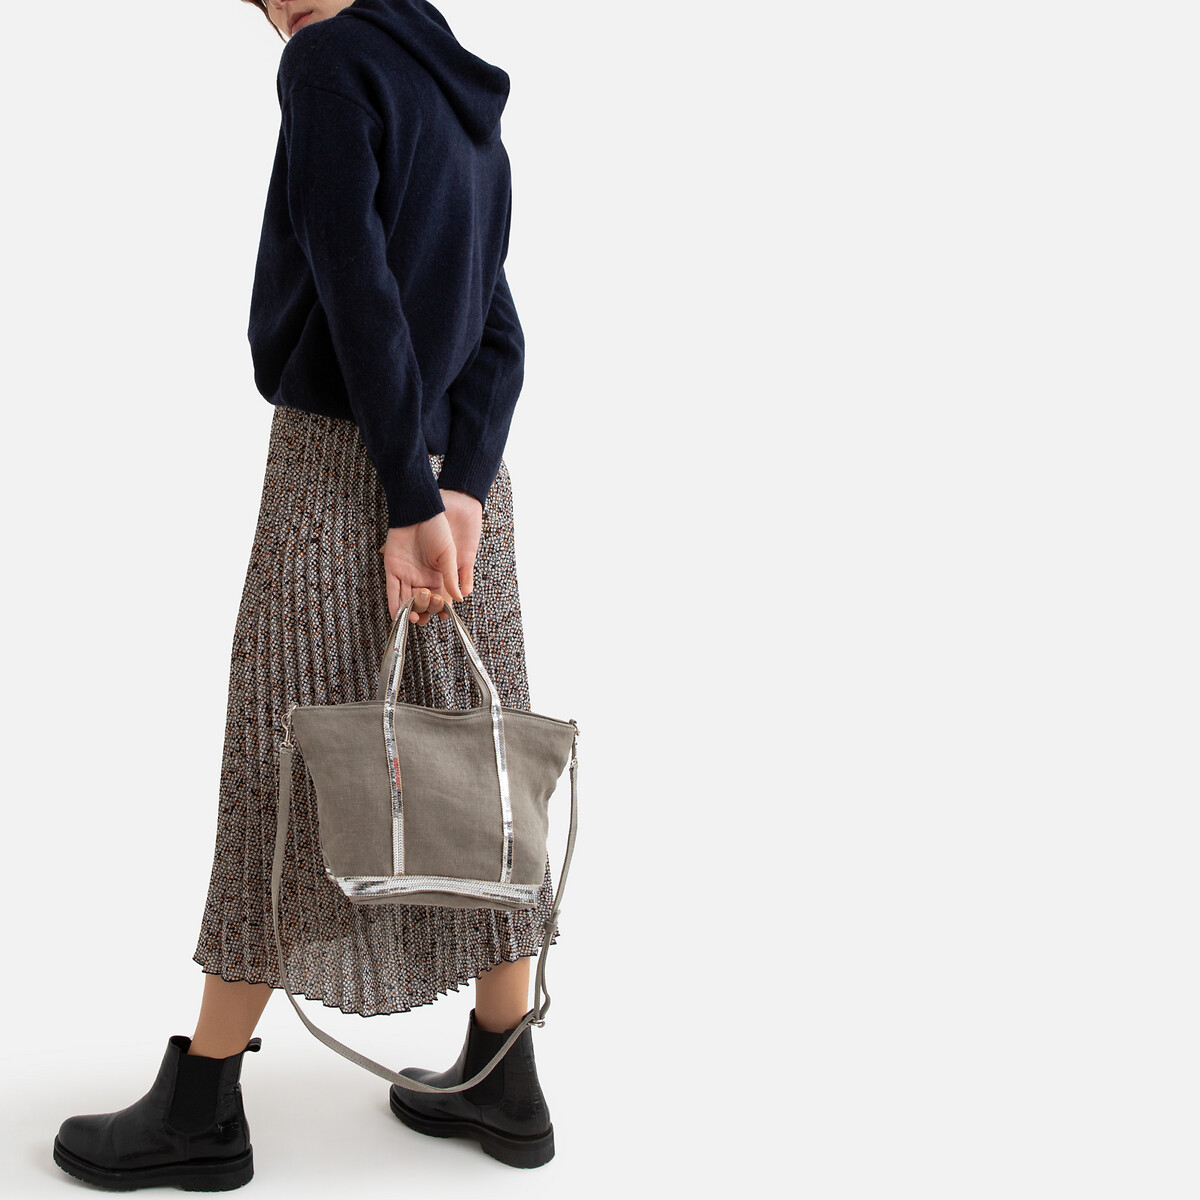 Linen Sequined Tote Bag with Shoulder Strap